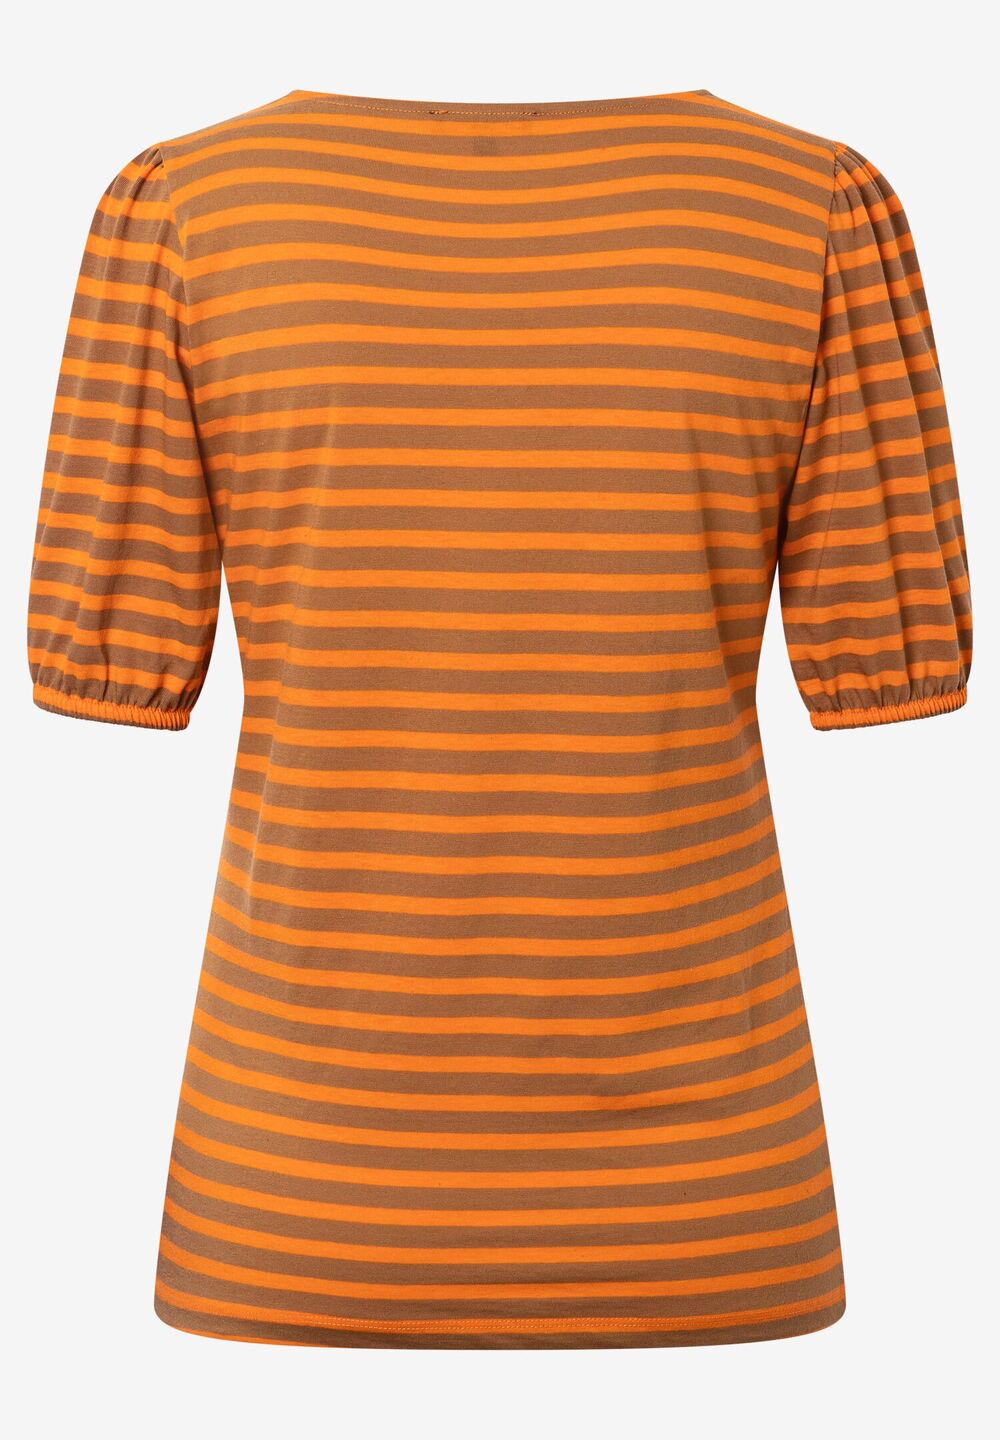 Streifenshirt, orange/nougat, Sommer-Kollektion, orange